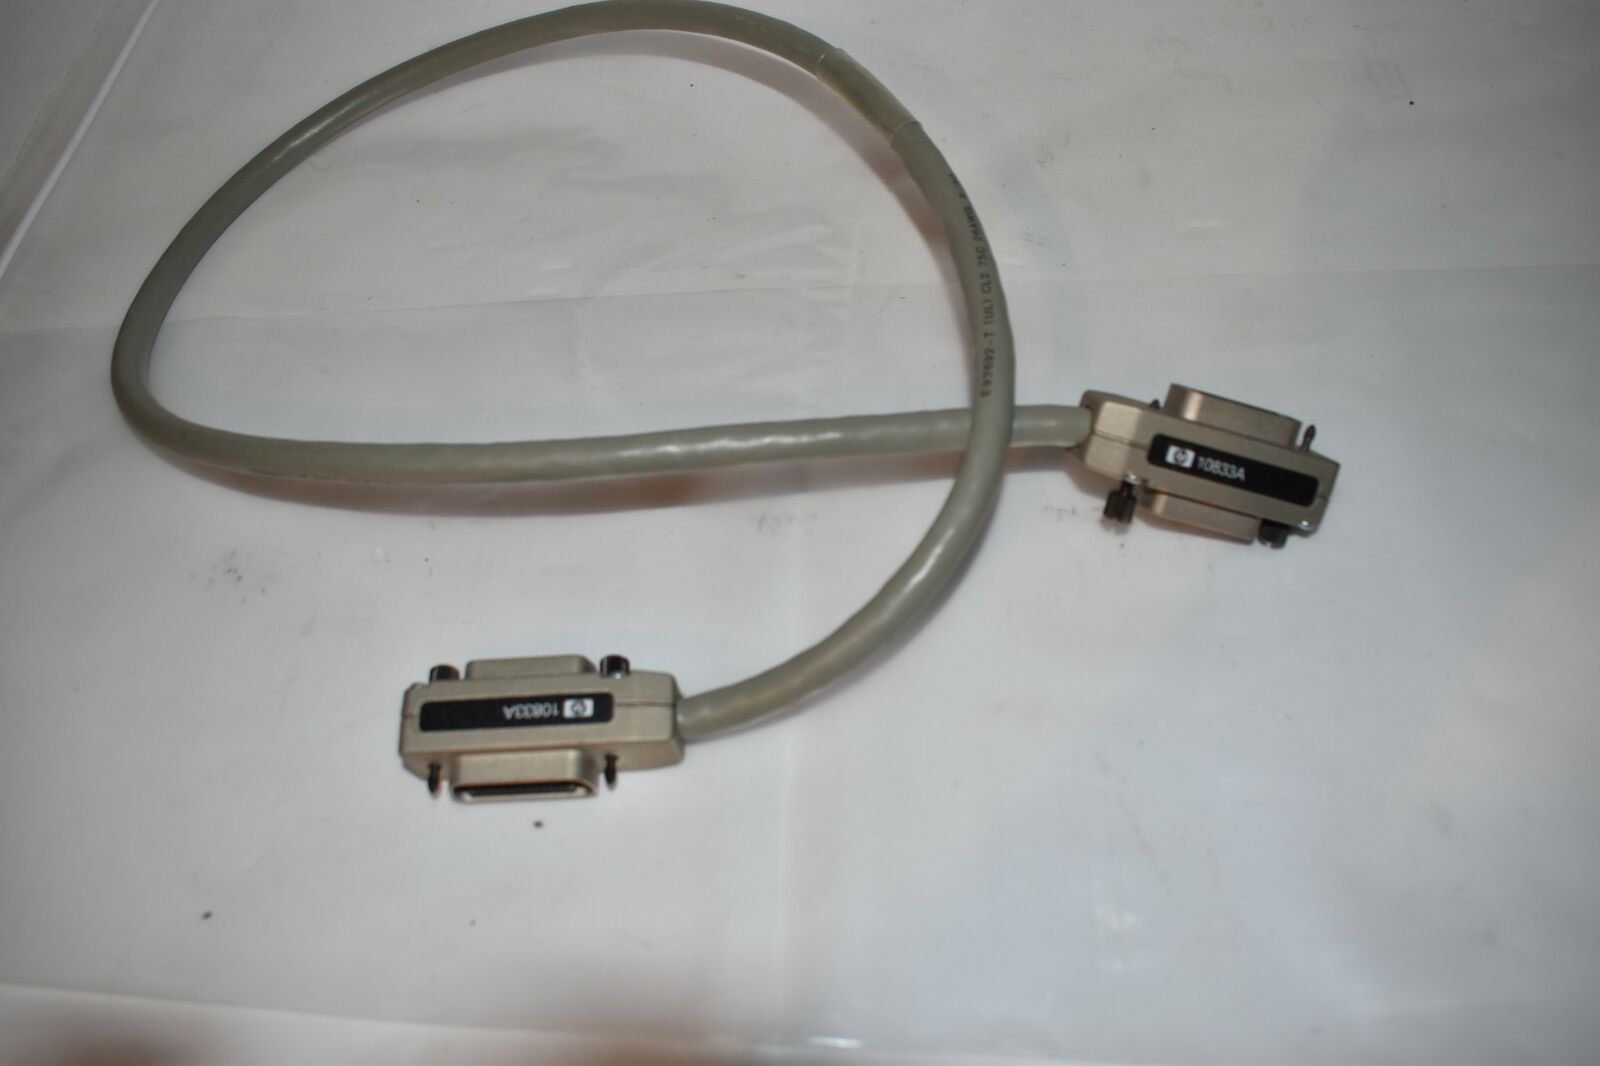 Hewlett Packard 10833a Gpib Cable (he54)